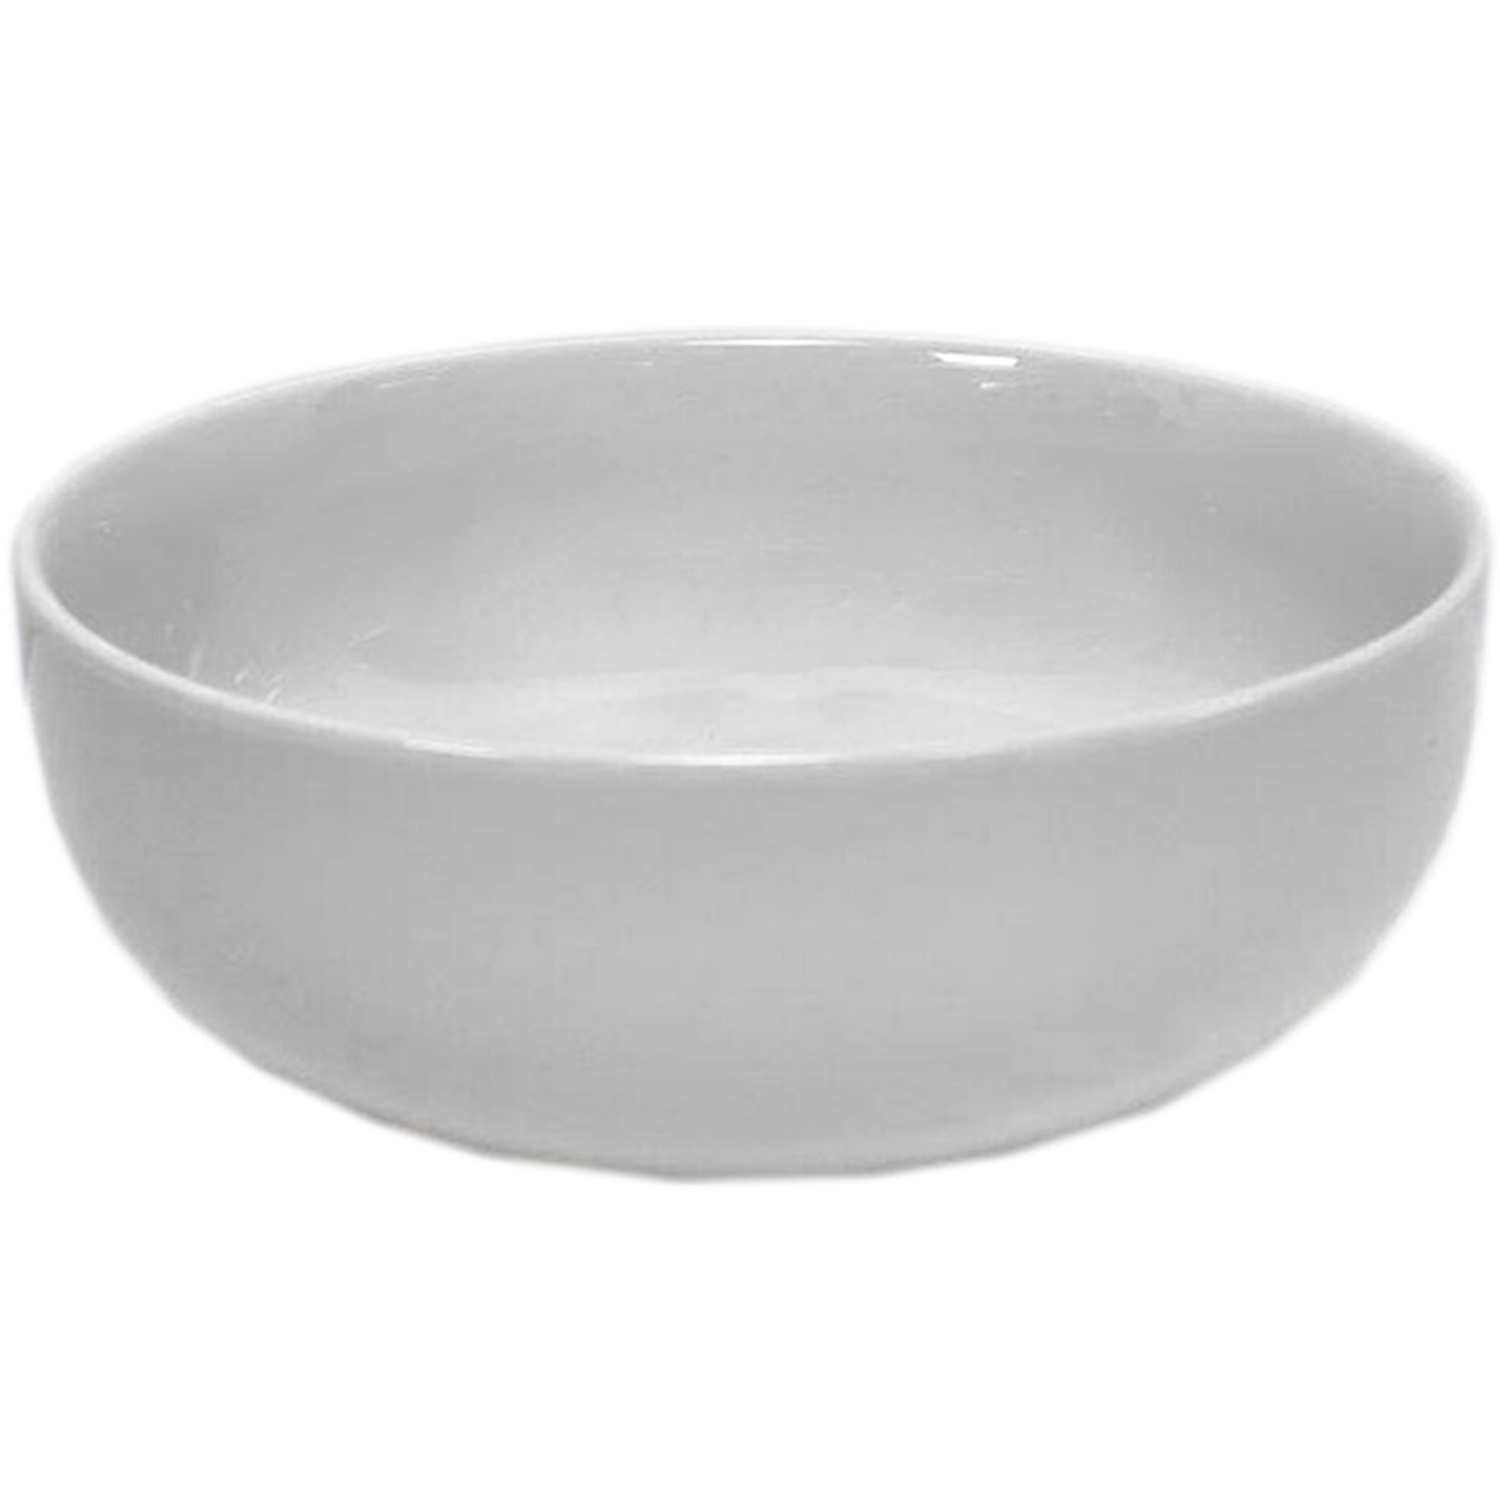 White Contemporary Dessert Bowl Image